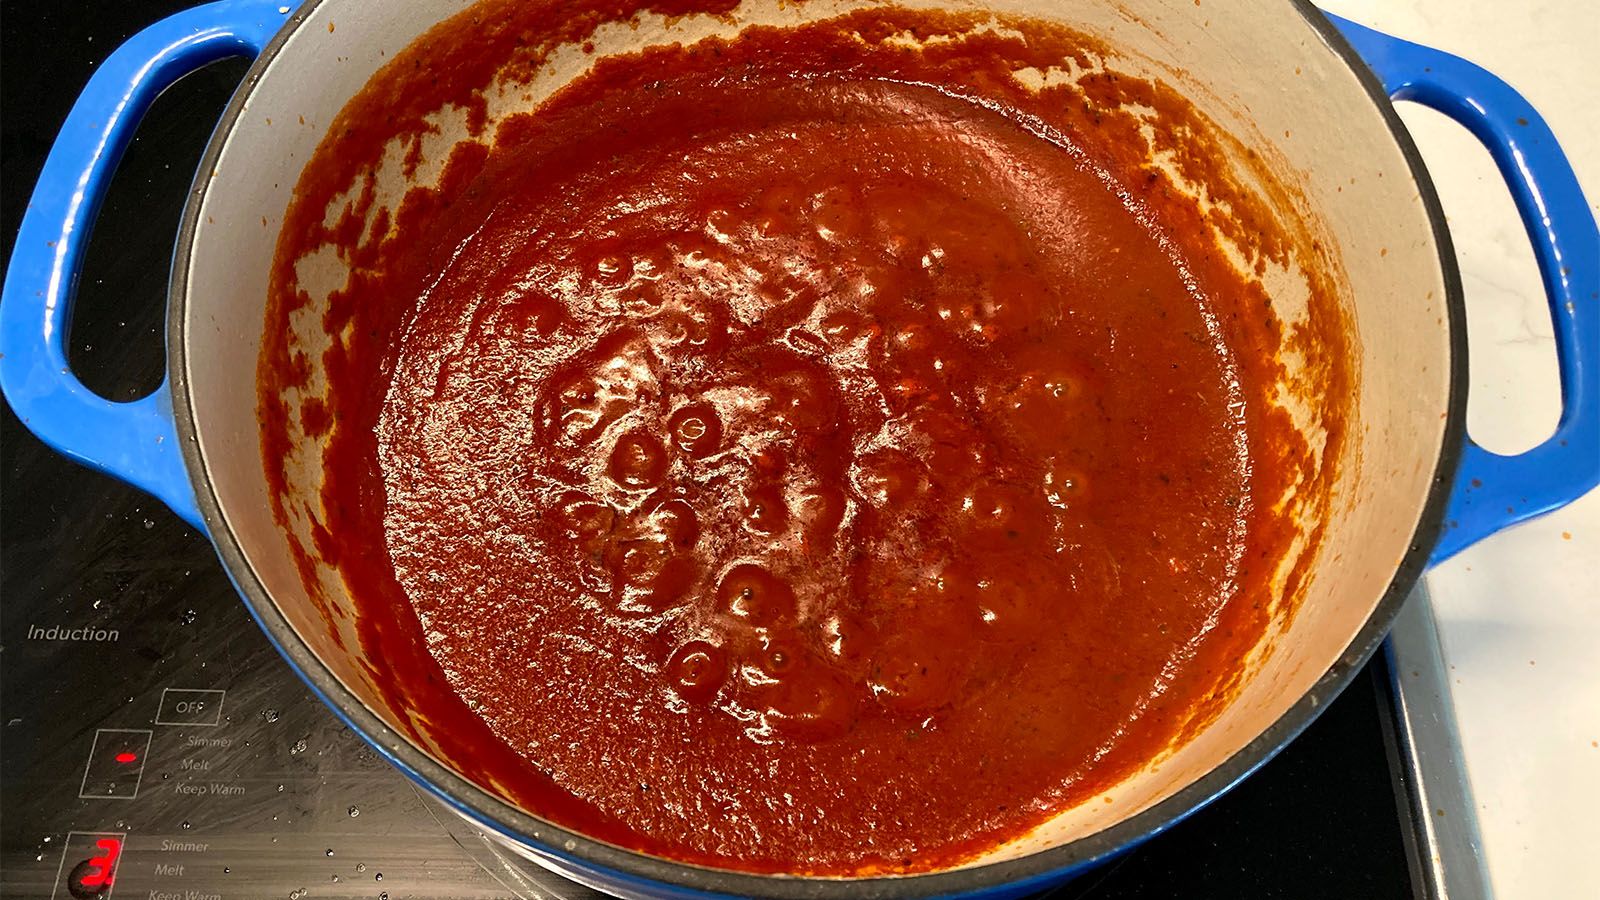 https://media.cnn.com/api/v1/images/stellar/prod/210914084931-undercored-best-dutch-oven-red-sauce.jpg?q=w_1600,h_900,x_0,y_0,c_fill